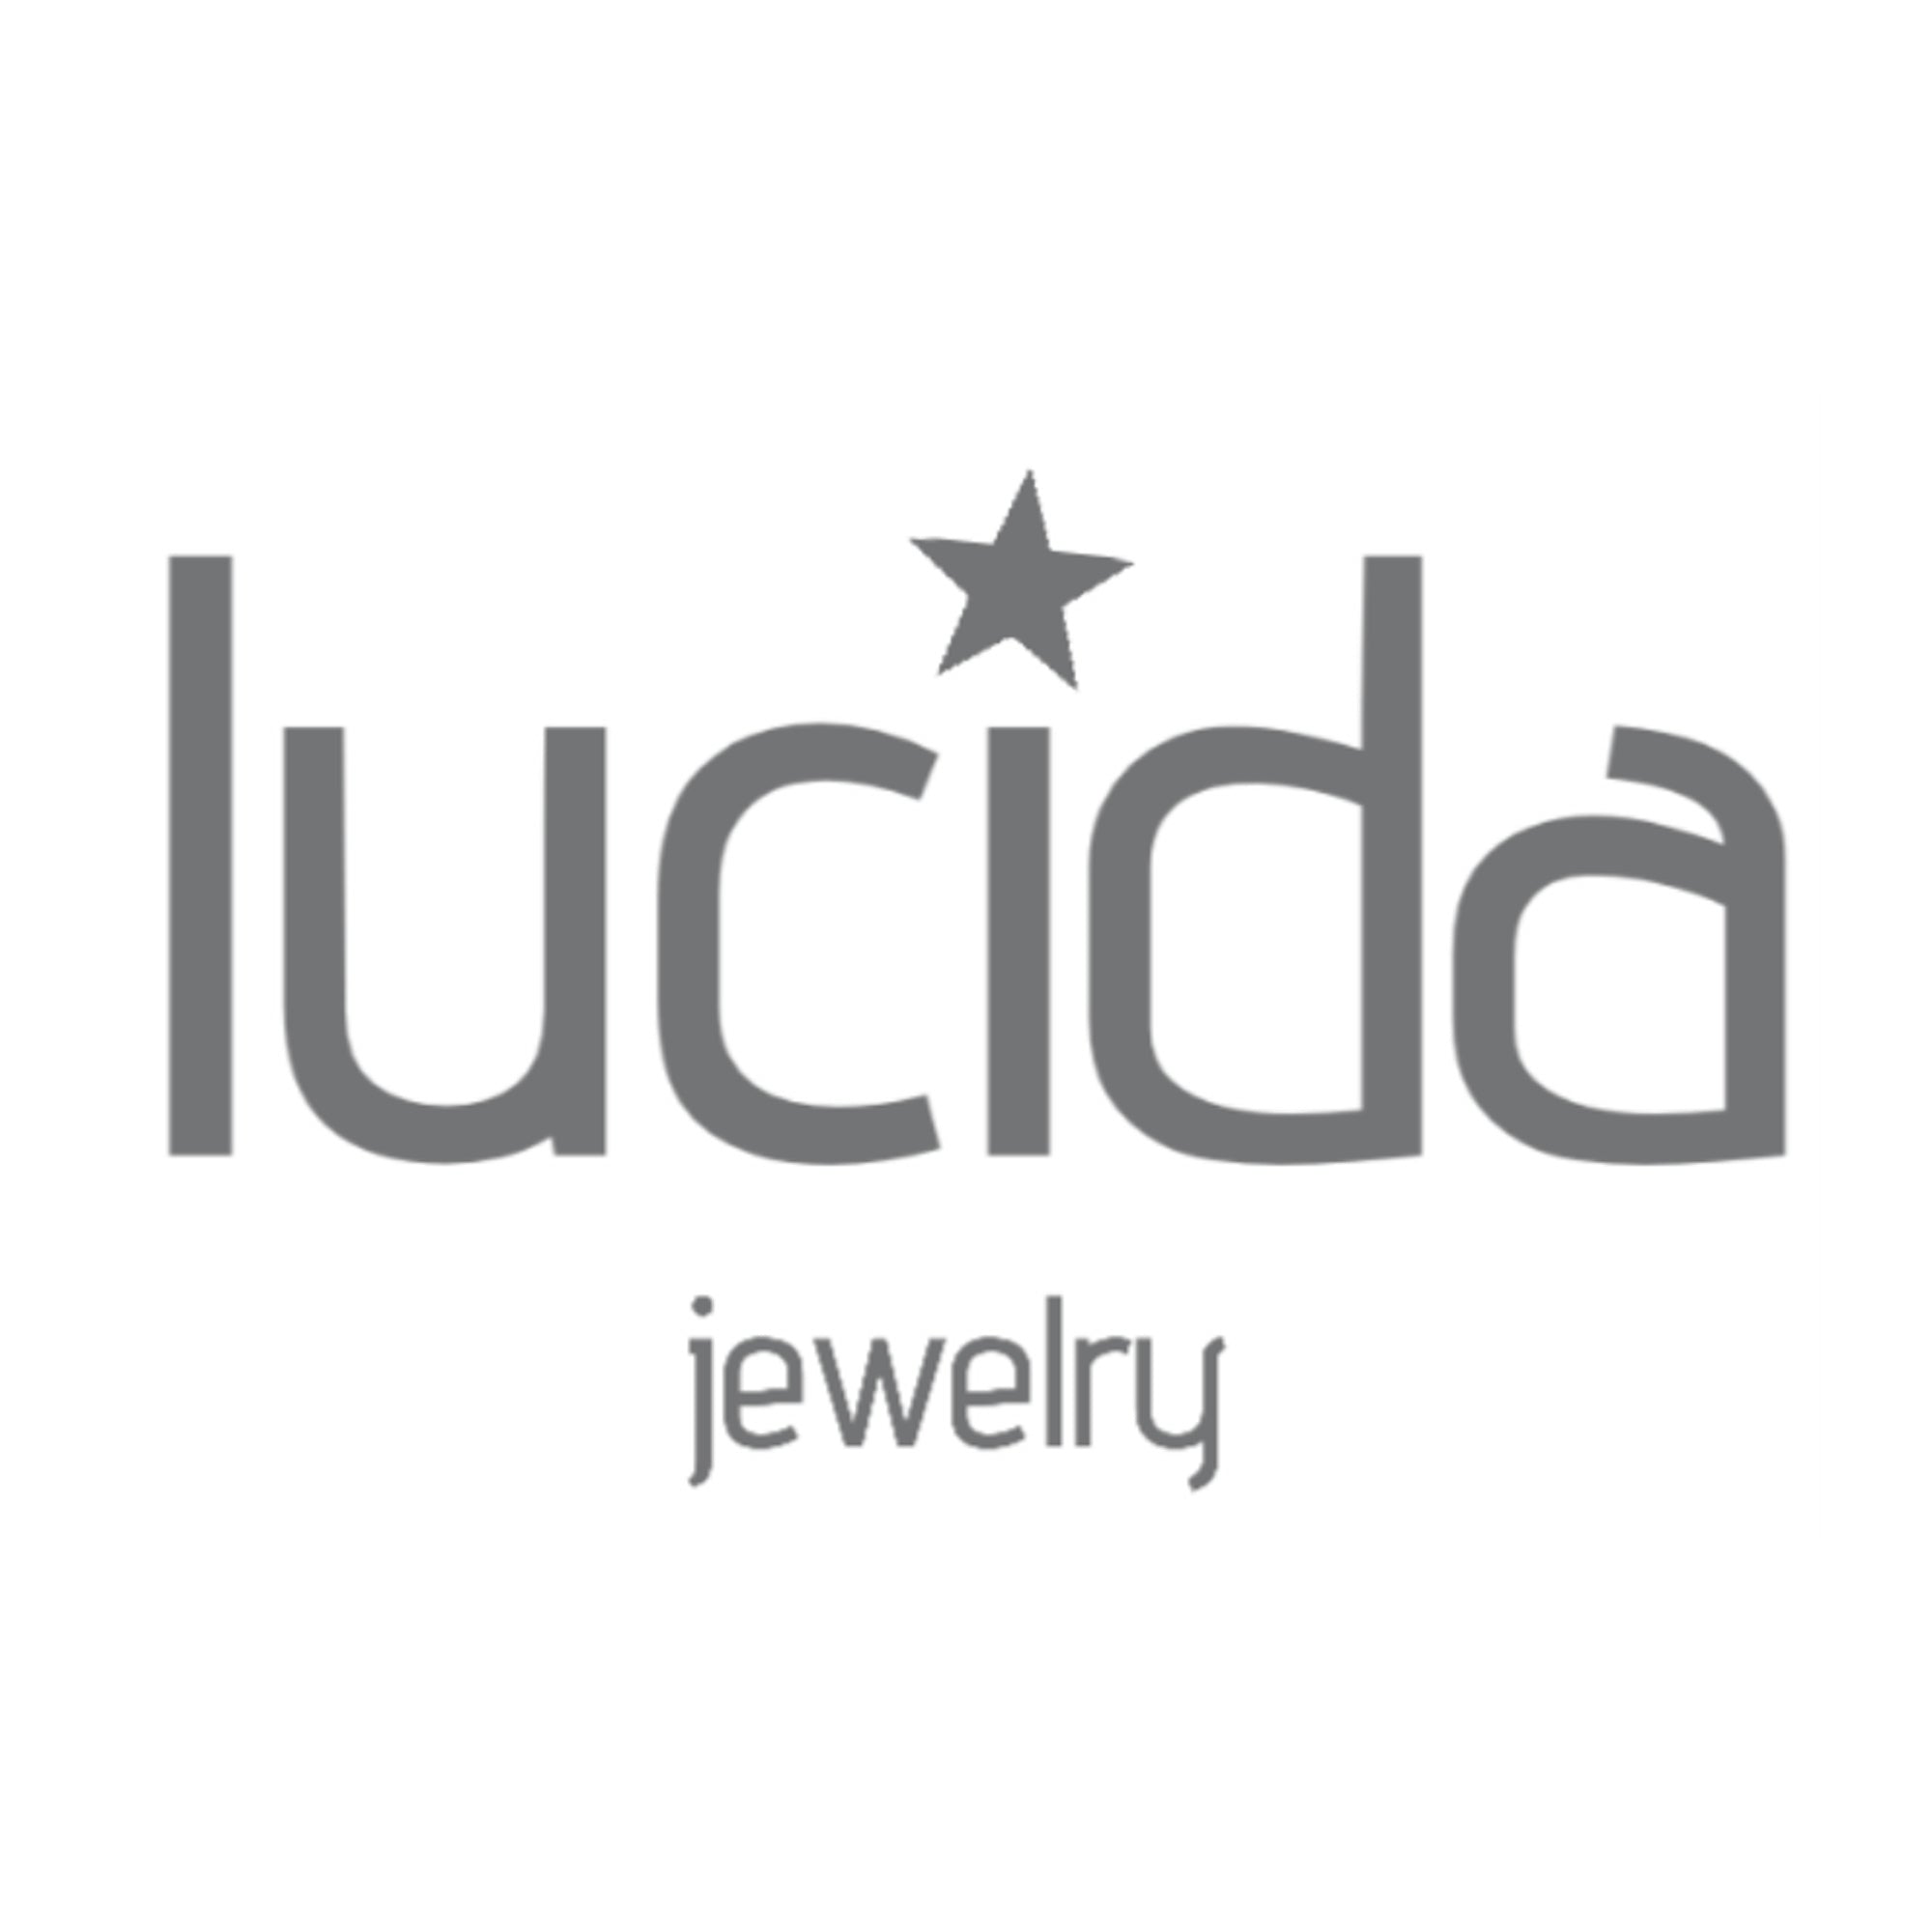 Lucida Jewelry logo